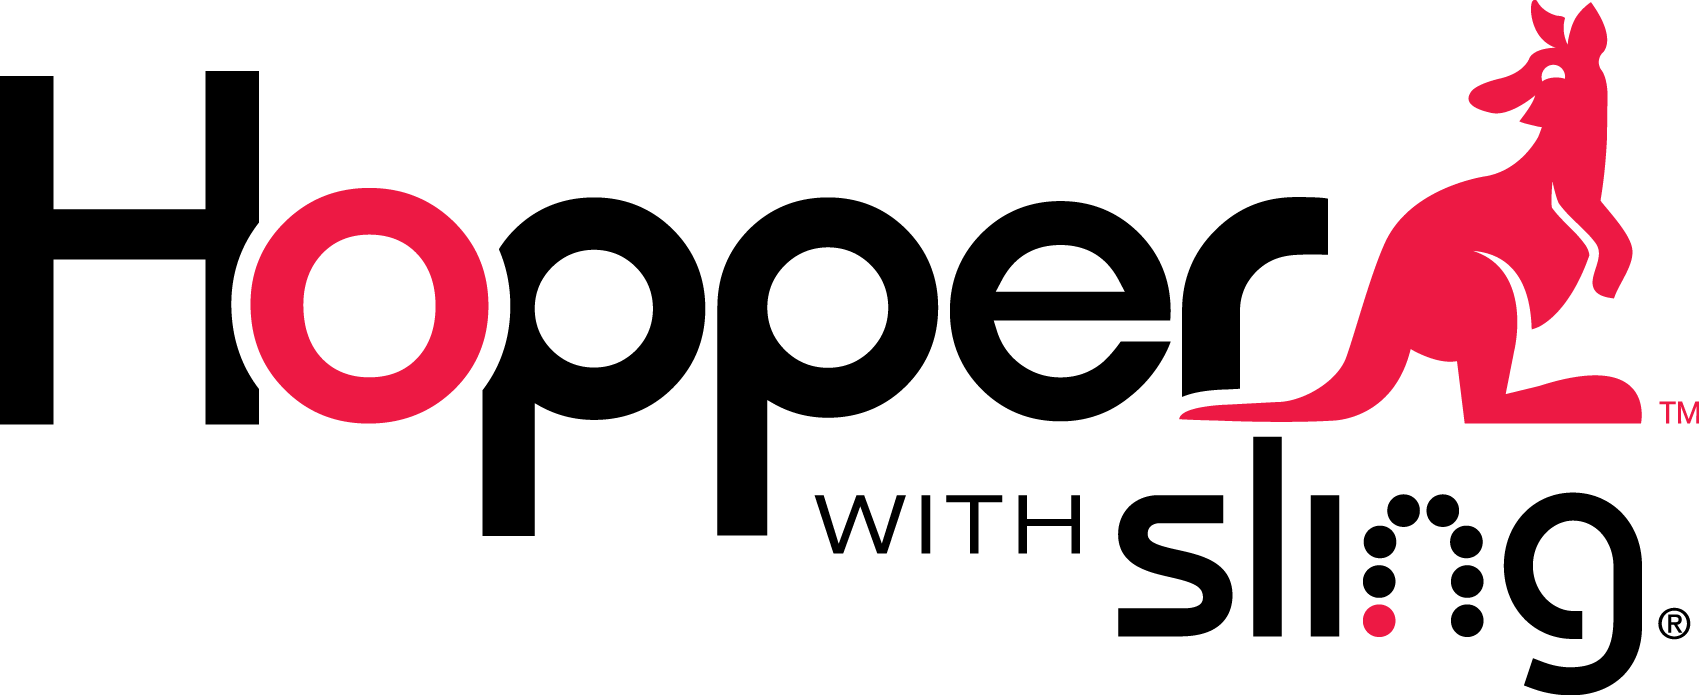 Hopper Logo - Dish Hopper with Sling HD Satellite Receiver